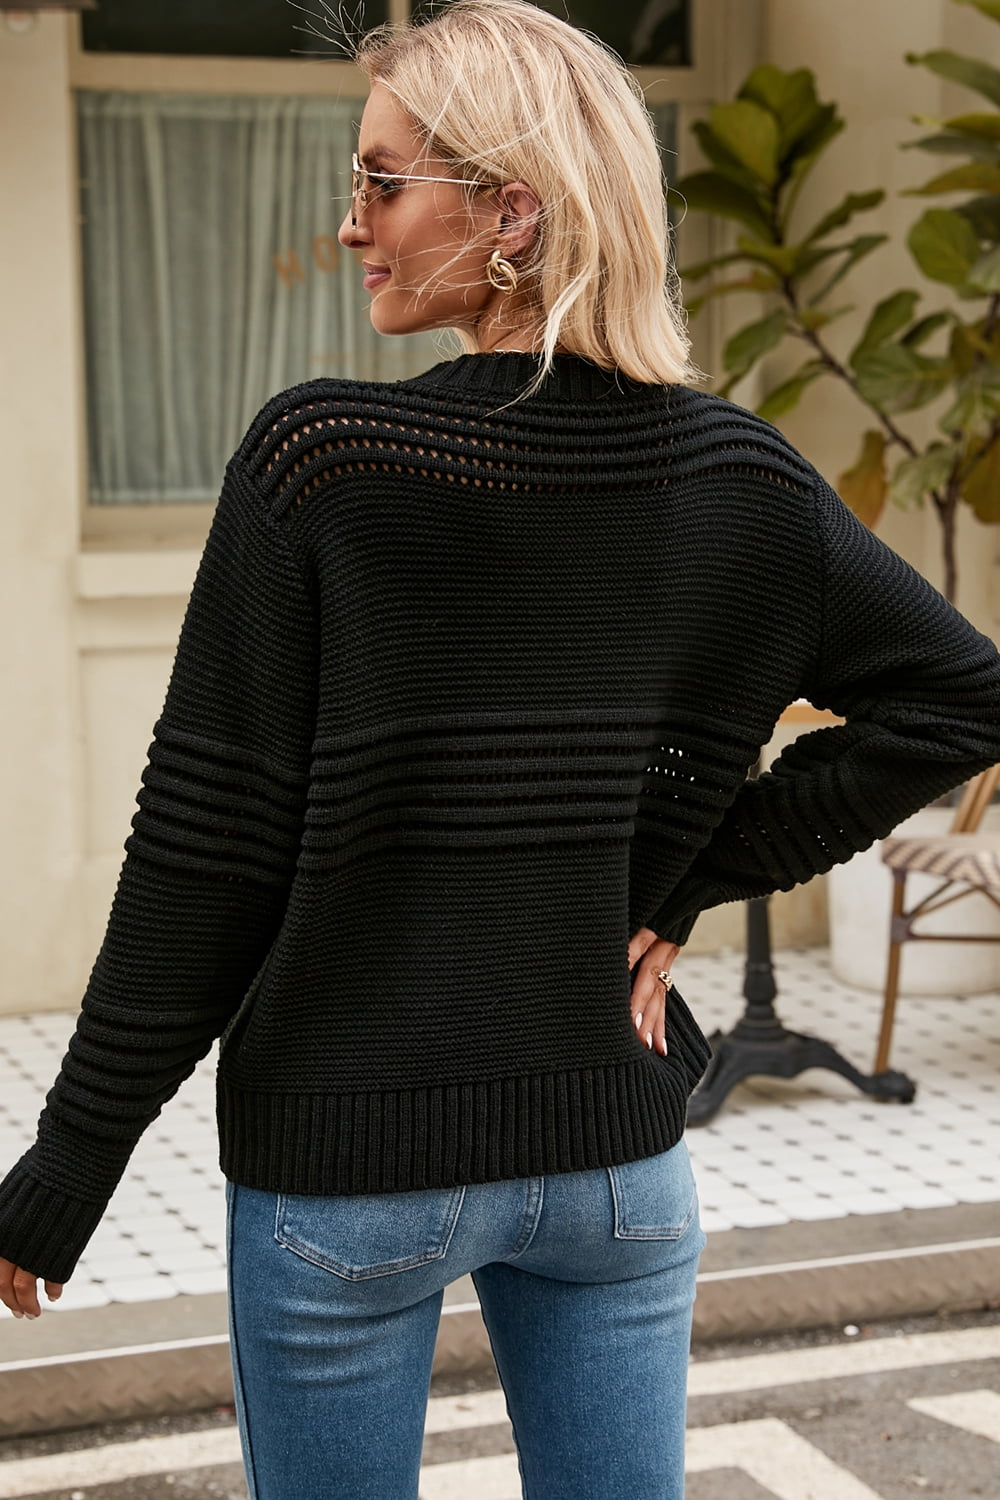 Malibu Dreams Round Neck Openwork Long Sleeve Pullover Sweater